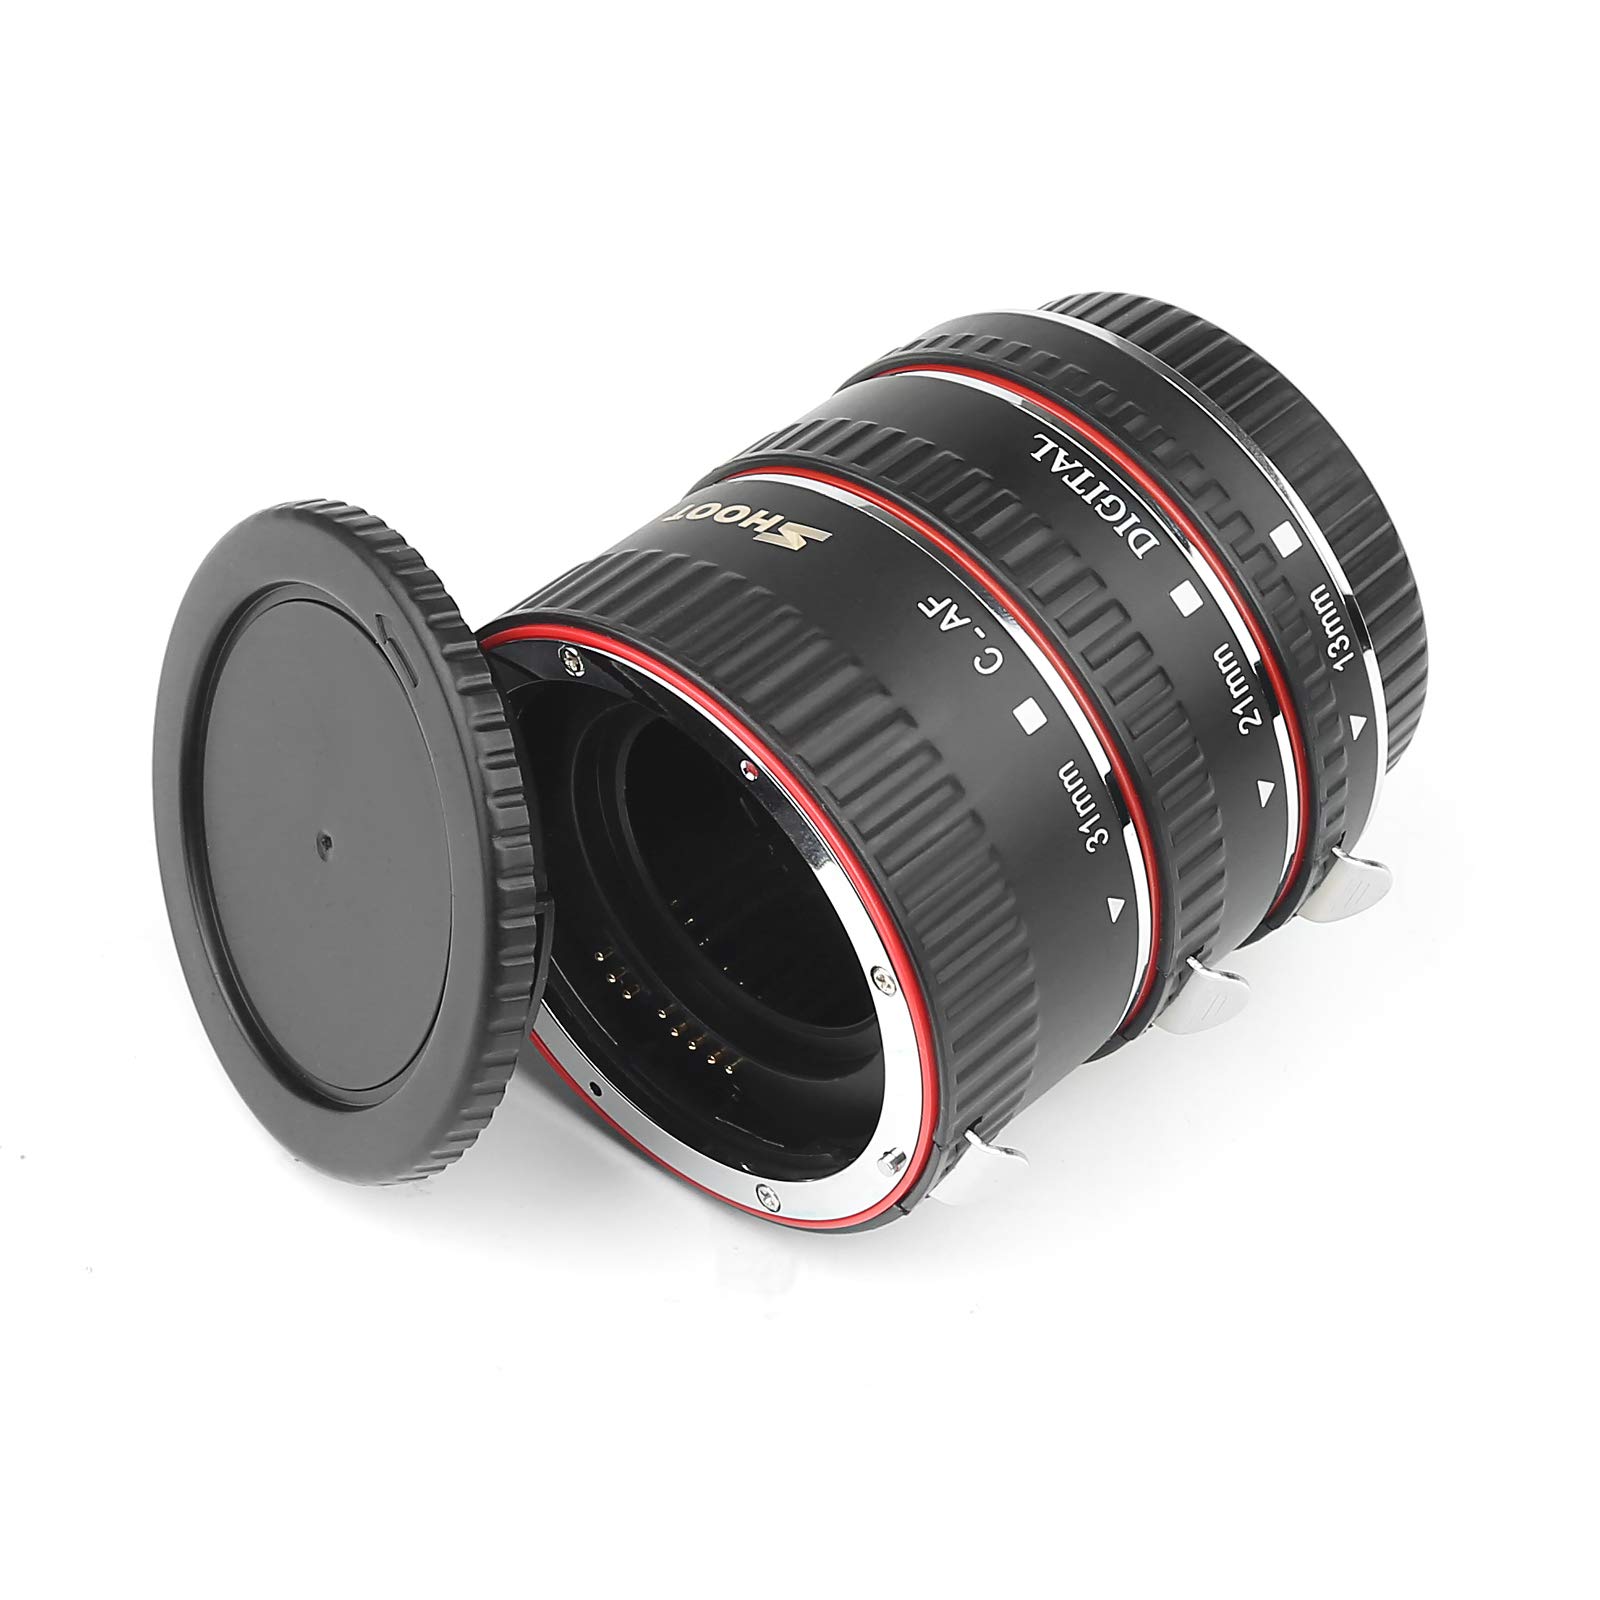 D & F Autofokus Makroverlängerung Tube Set EOS EF / EF-S Objektiv Nahaufnahmen für Canon EOS EF Lens Such as Canon 7D,500D,600D,700D,5D Mark II III, Rebel T2i, T3i, T5i...